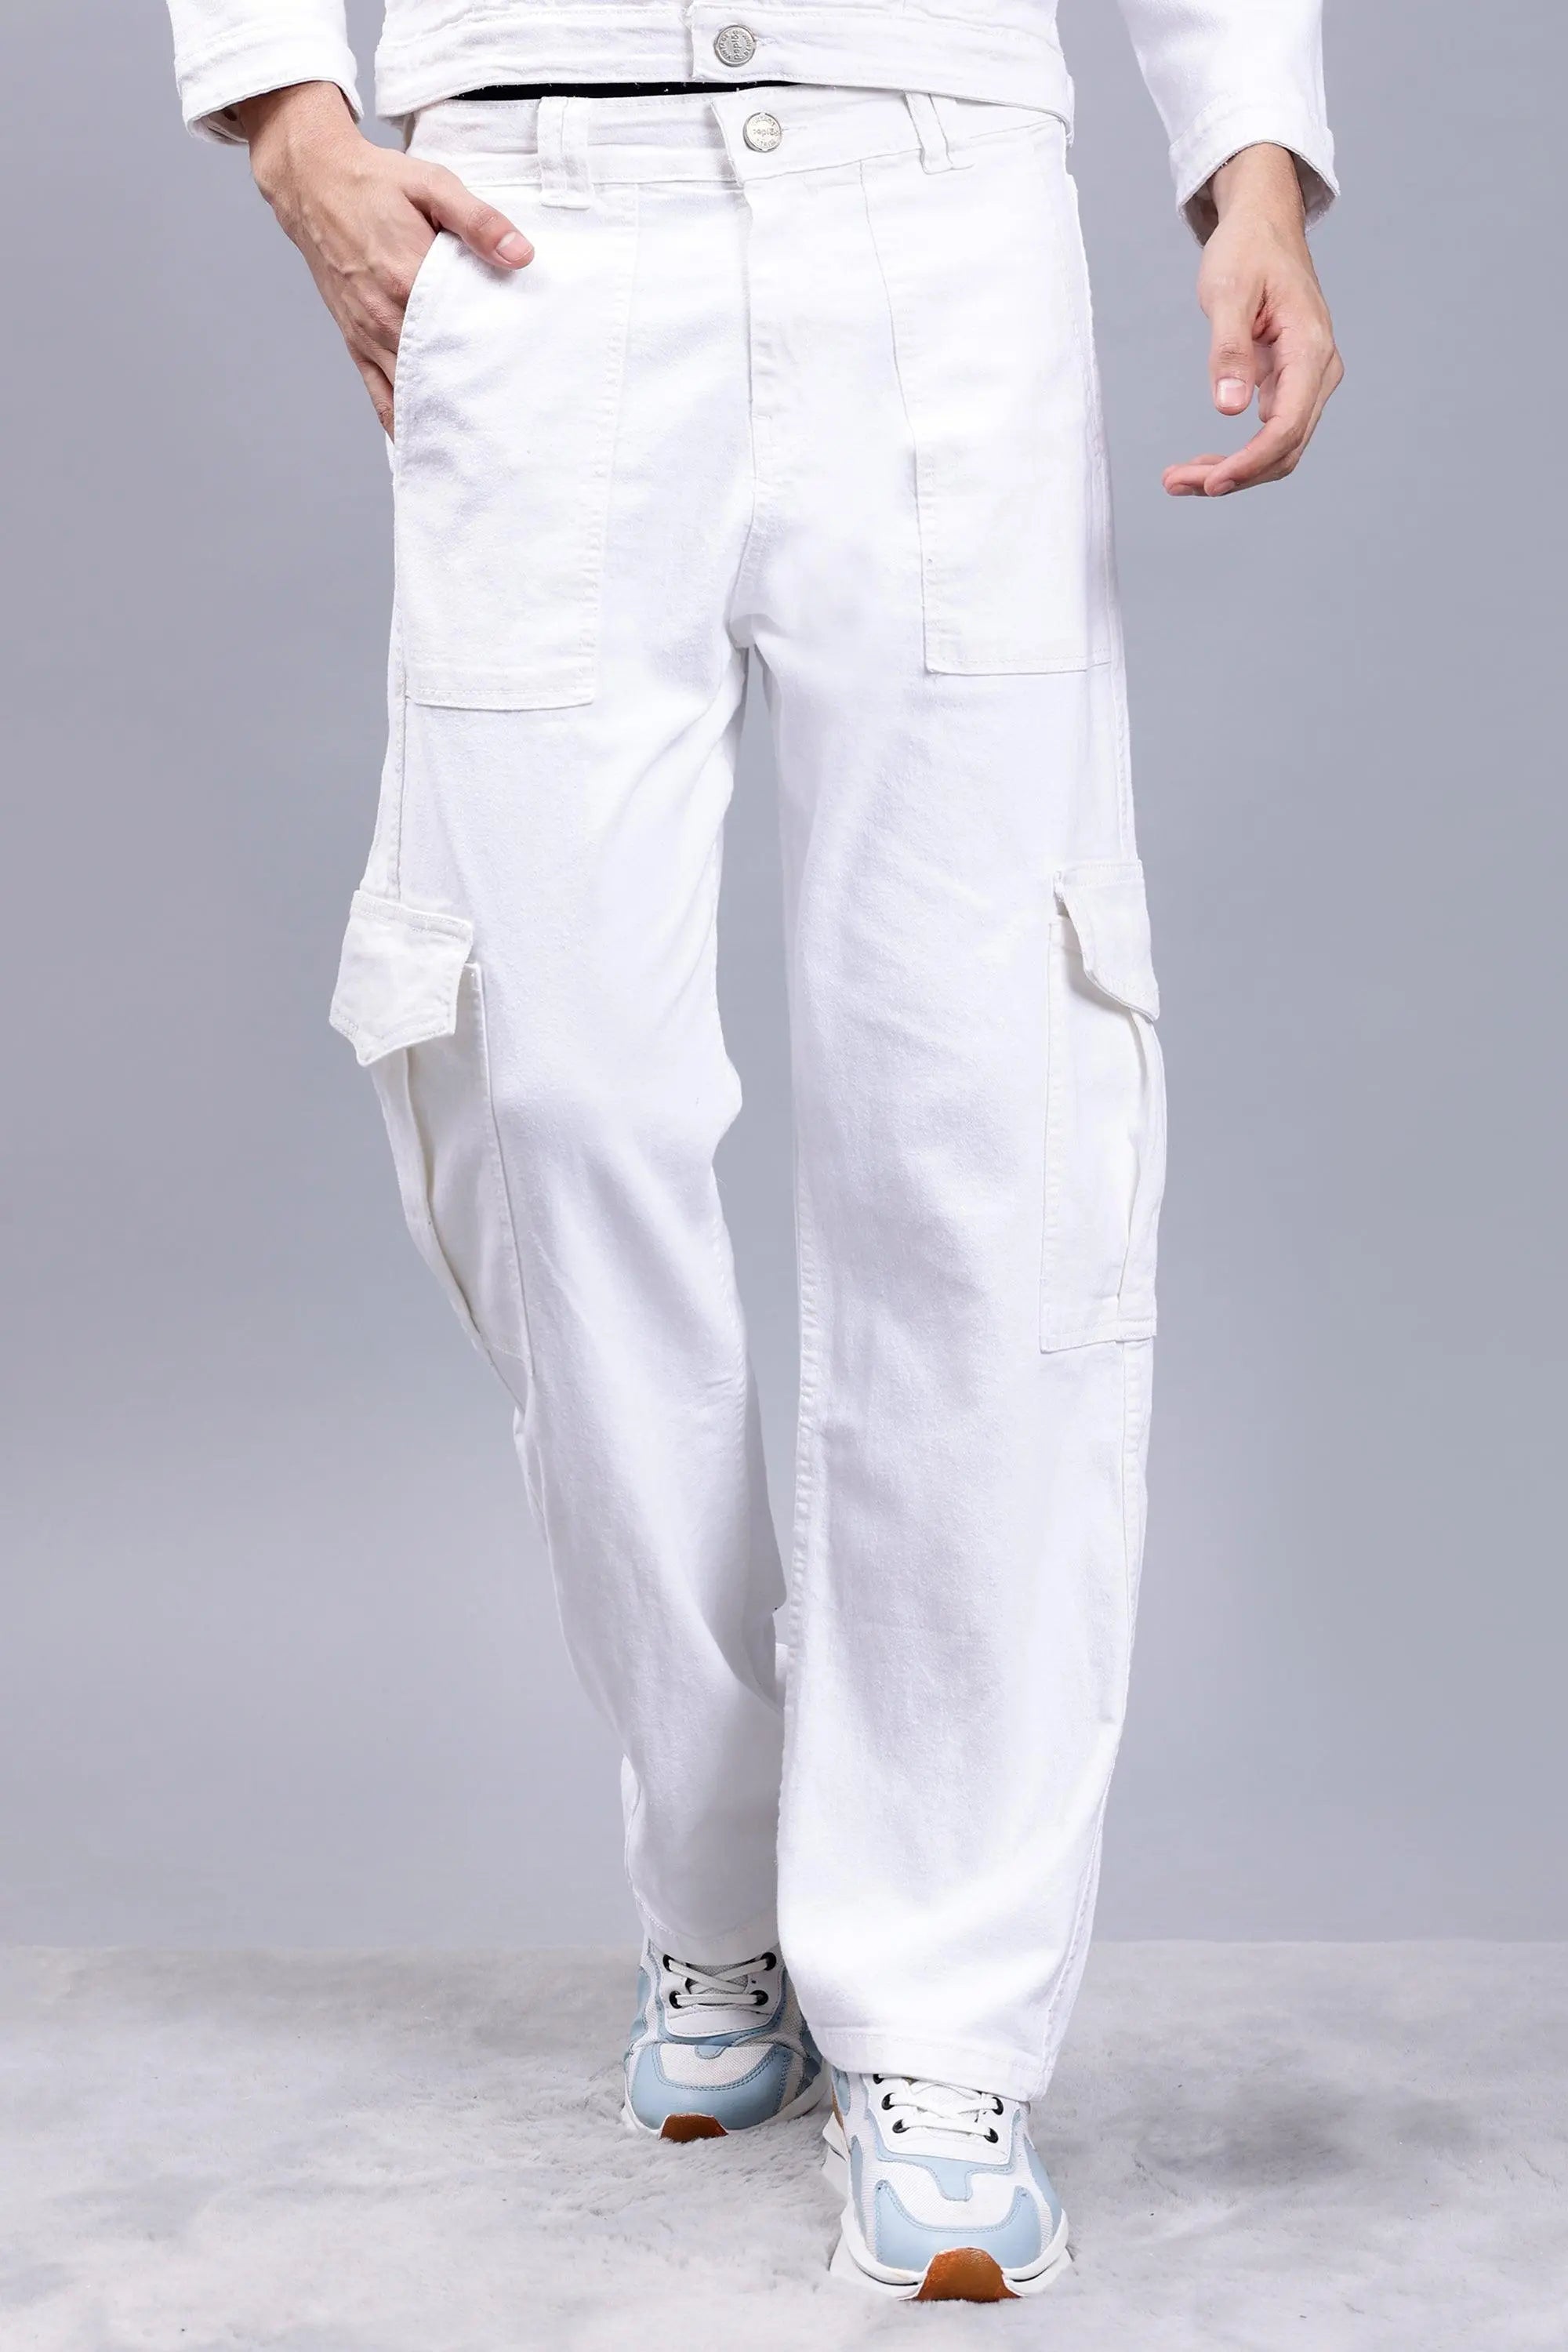 White Colour Denim Jacket at Rs 158/piece | Denim Jackets in New Delhi |  ID: 25633098548